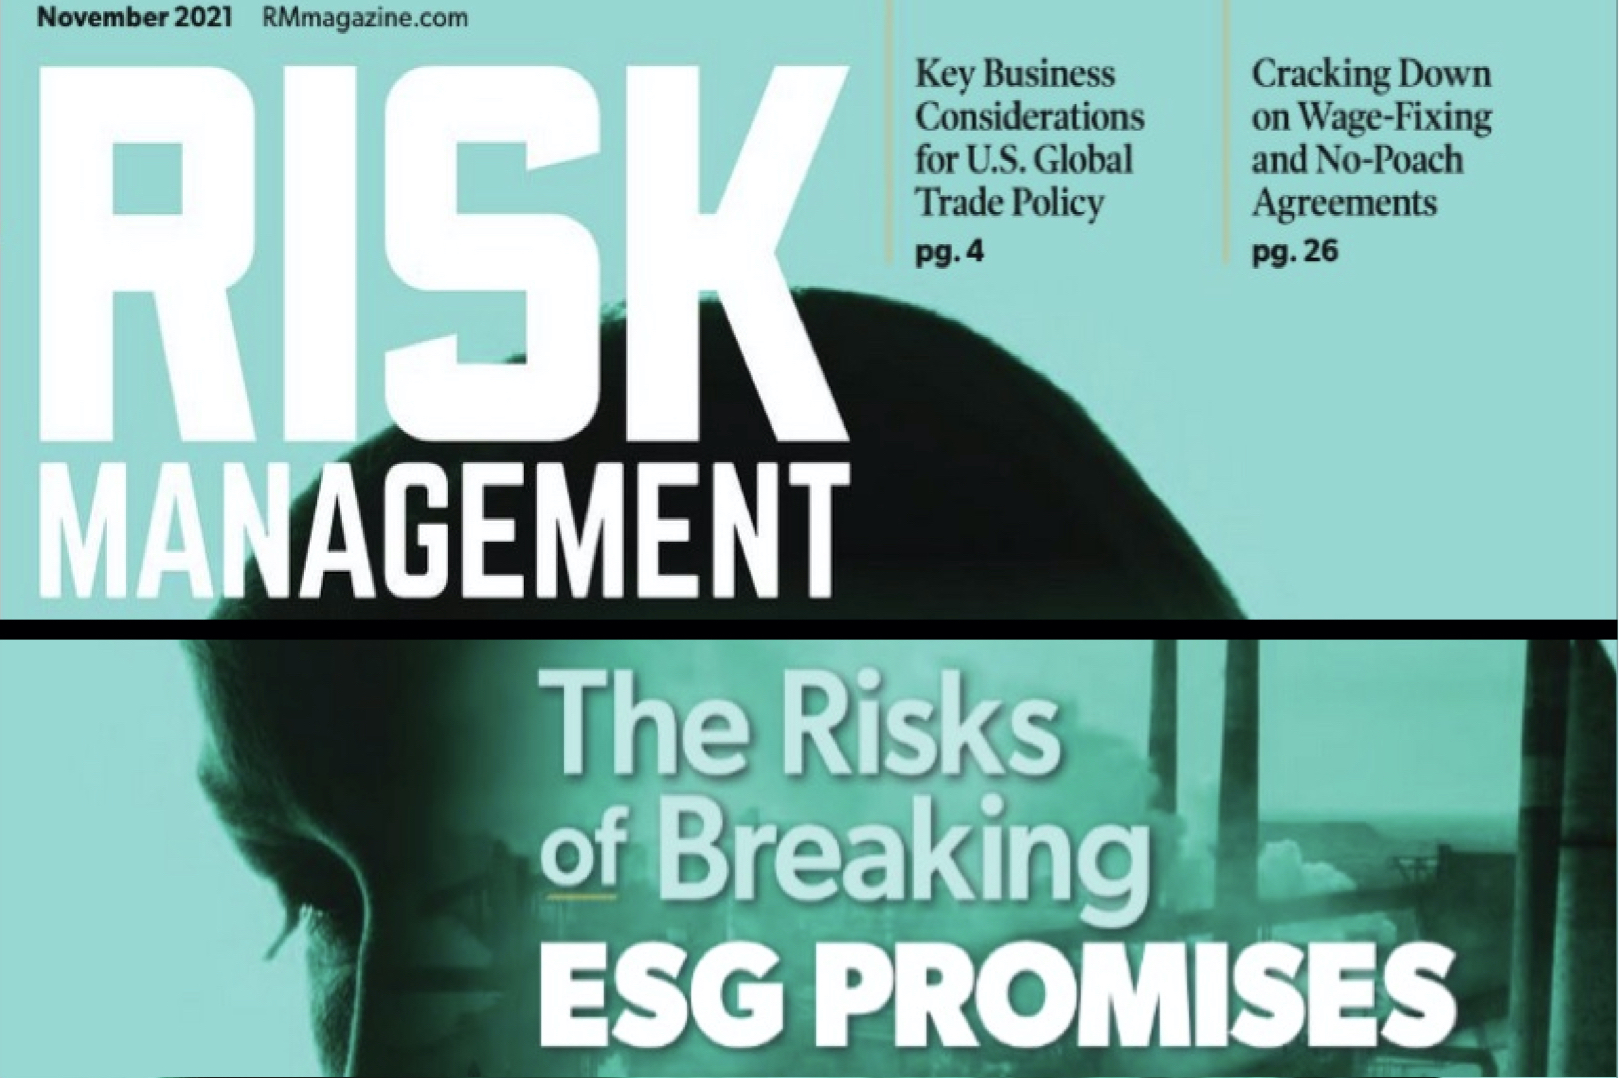 RIMS' Risk Management Magazine